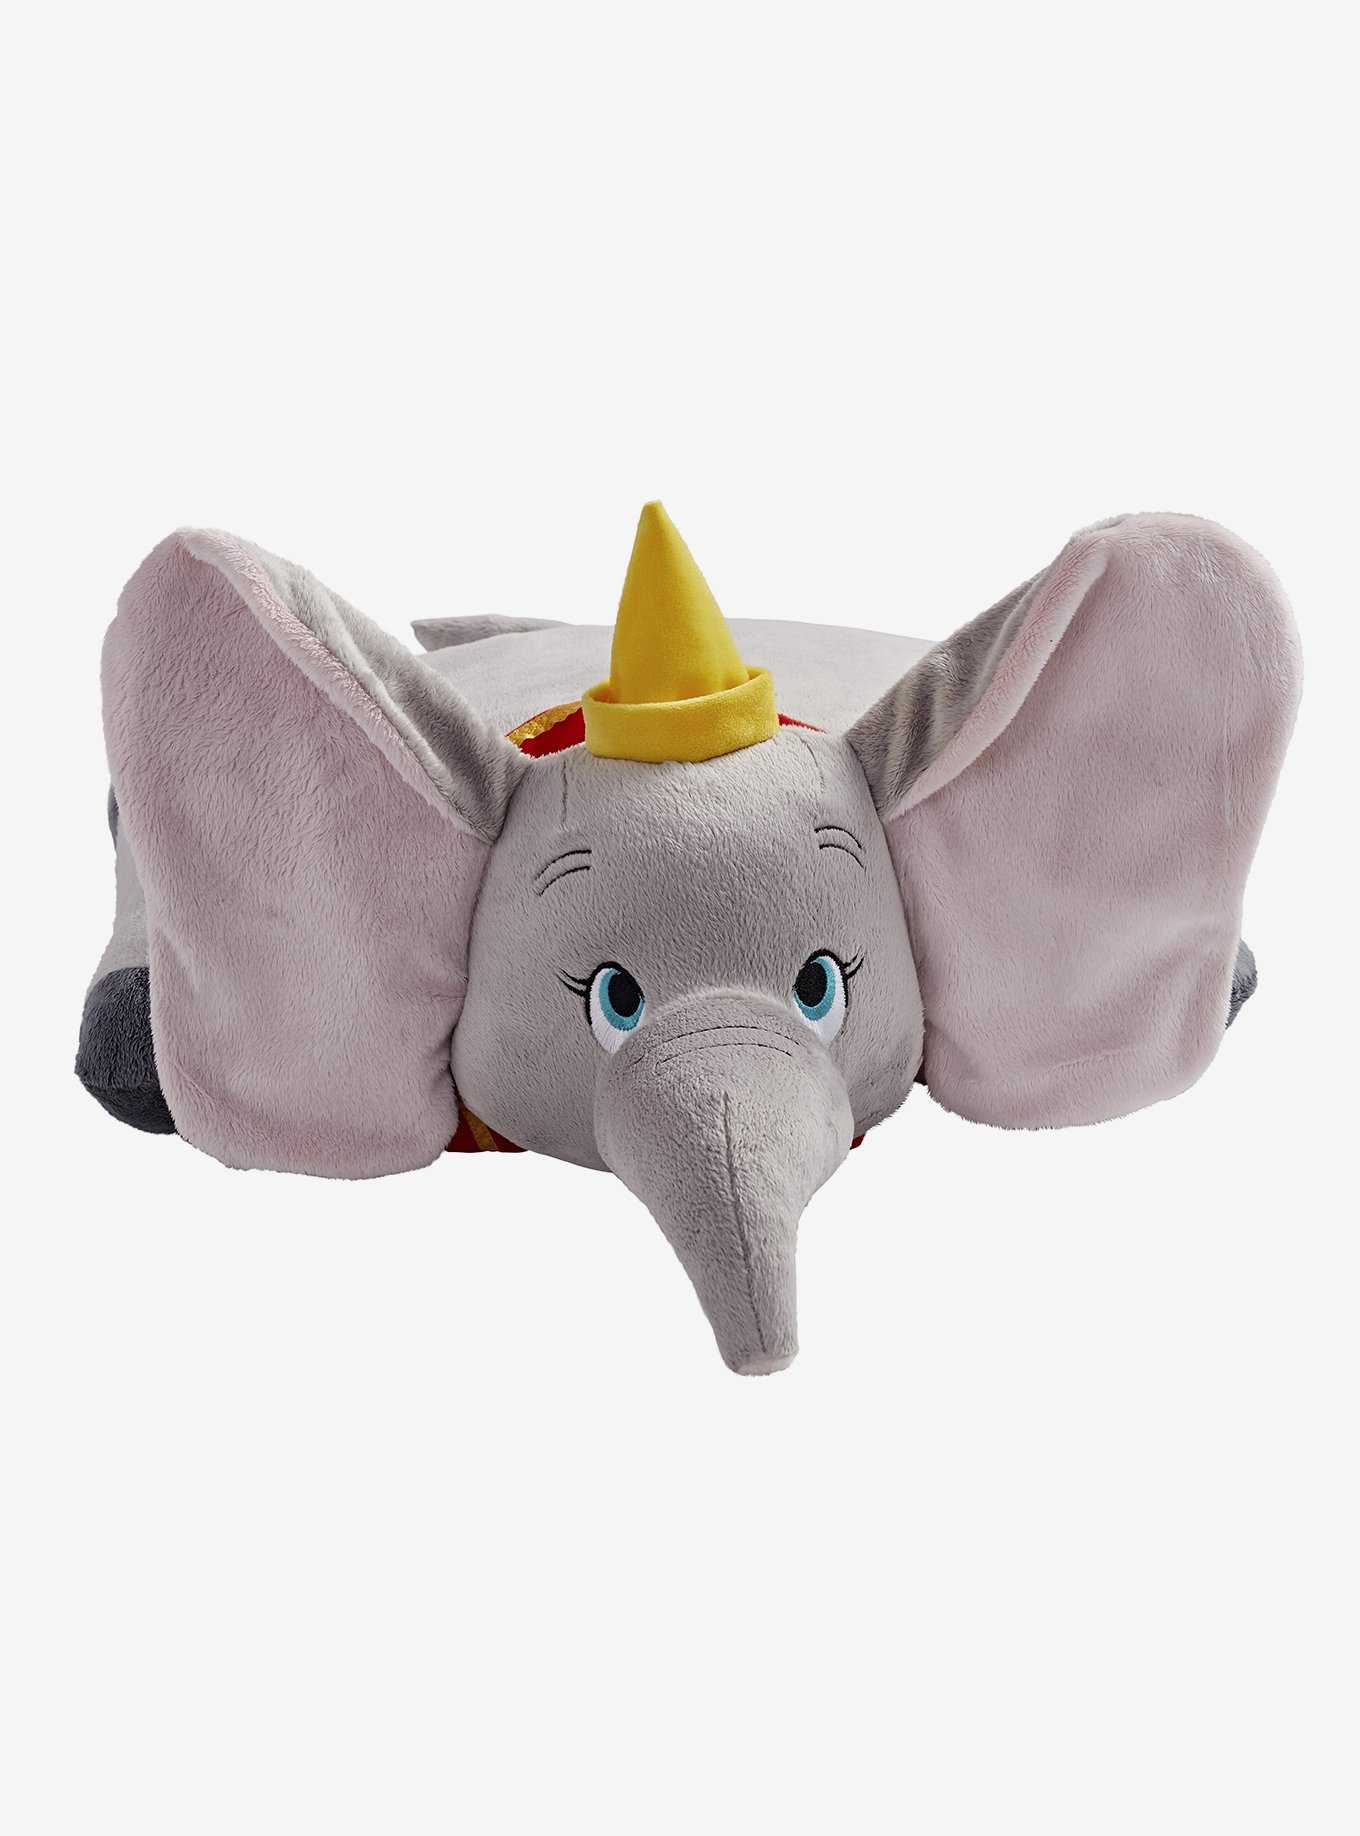 Disney Dumbo Pillow Pets Plush Toy, , hi-res